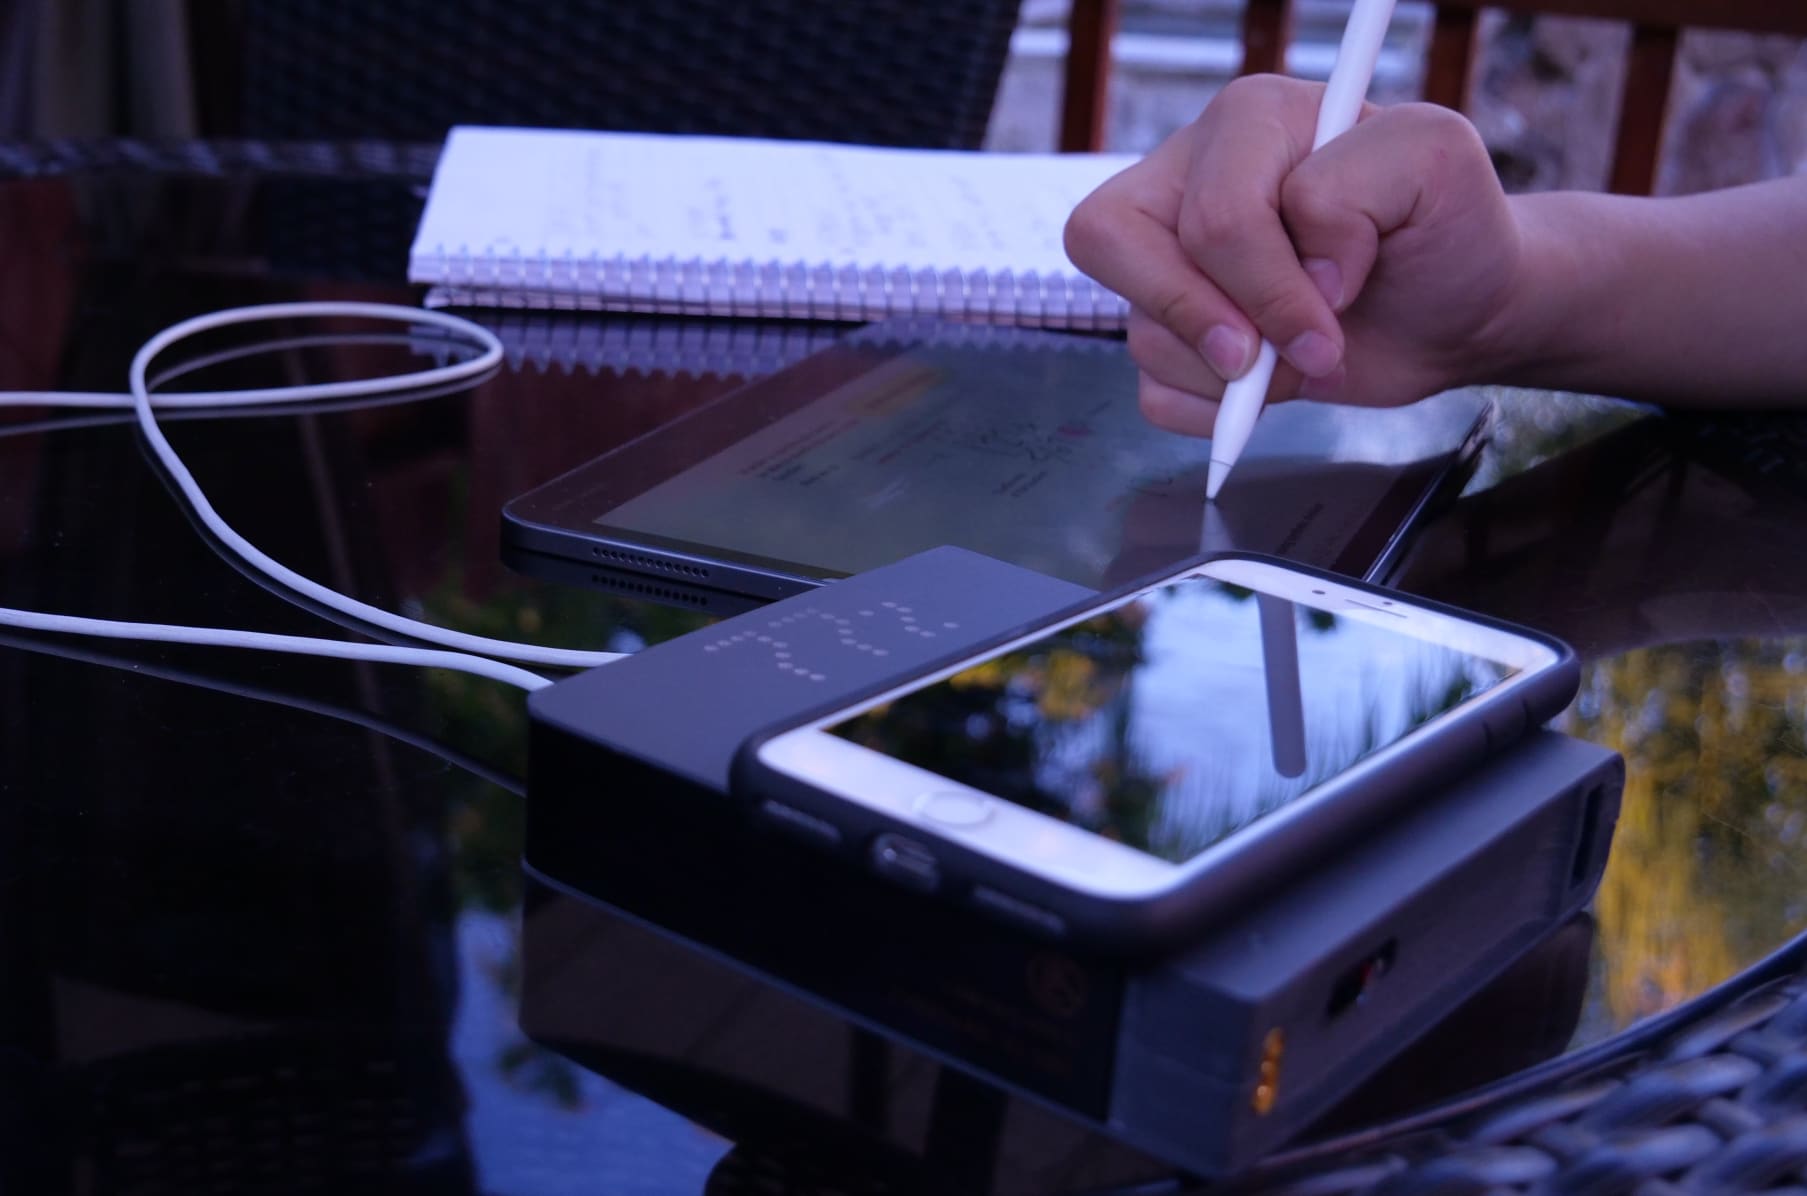 Mini Power Bank :lightning & USB-C Plug in and Powered on by Hornel —  Kickstarter